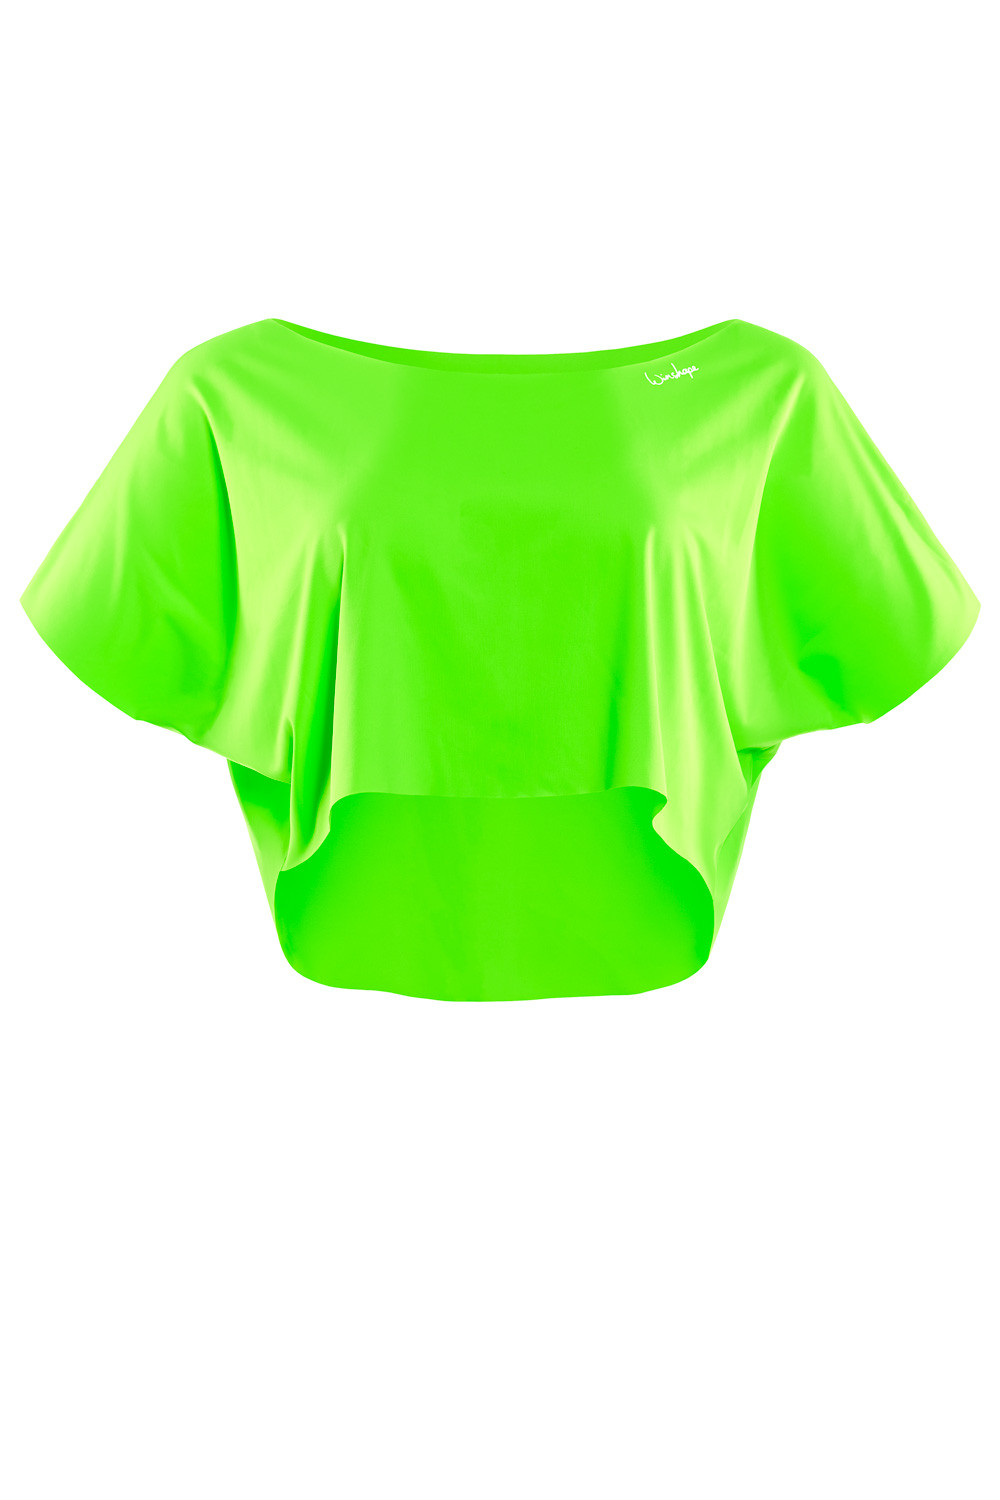 Winshape Dance-Top Functional Cropped Dance neon DT104, grün, Style Light